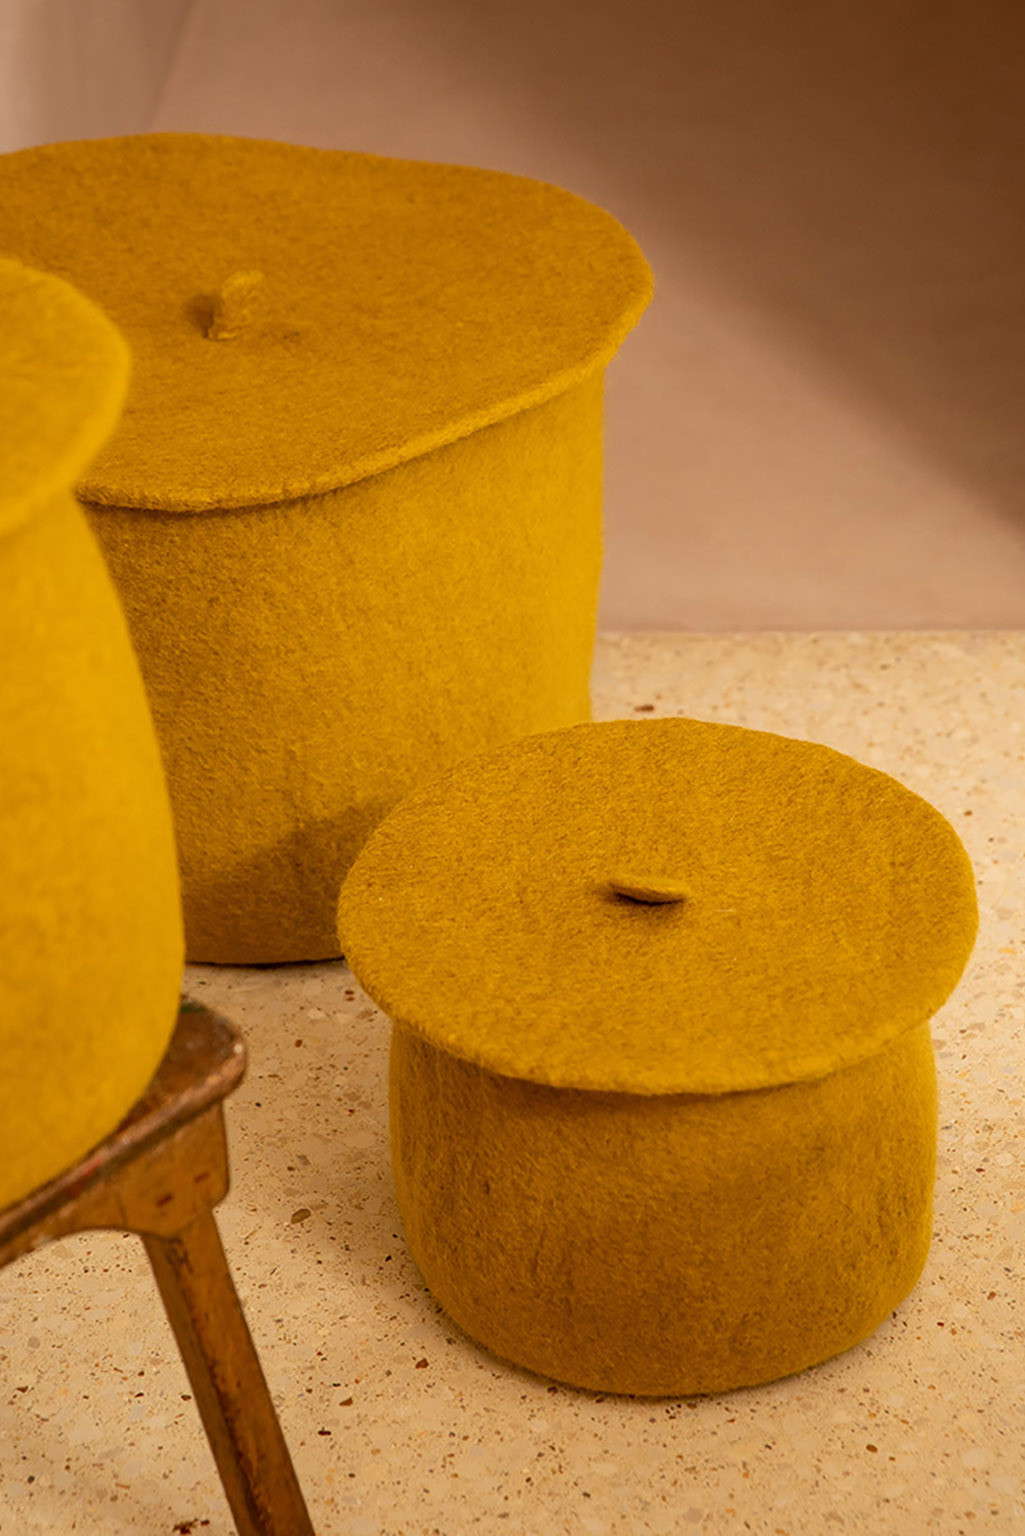 ochre felt storage baskets with their lids